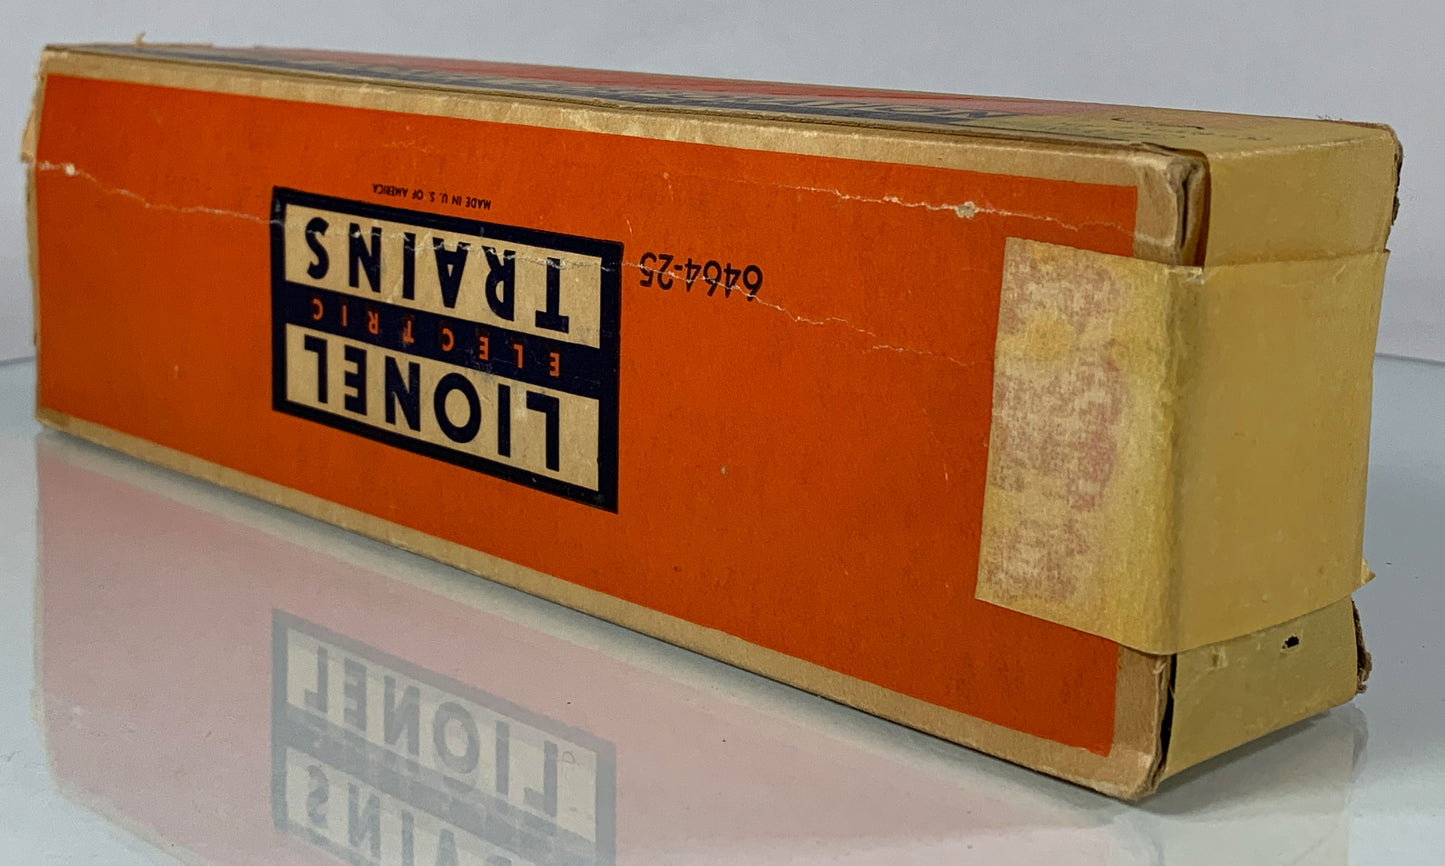 LIONEL • O GAUGE • 1953-1954 Postwar 6464-25 Great Northern Boxcar w Orig Box • EX COND